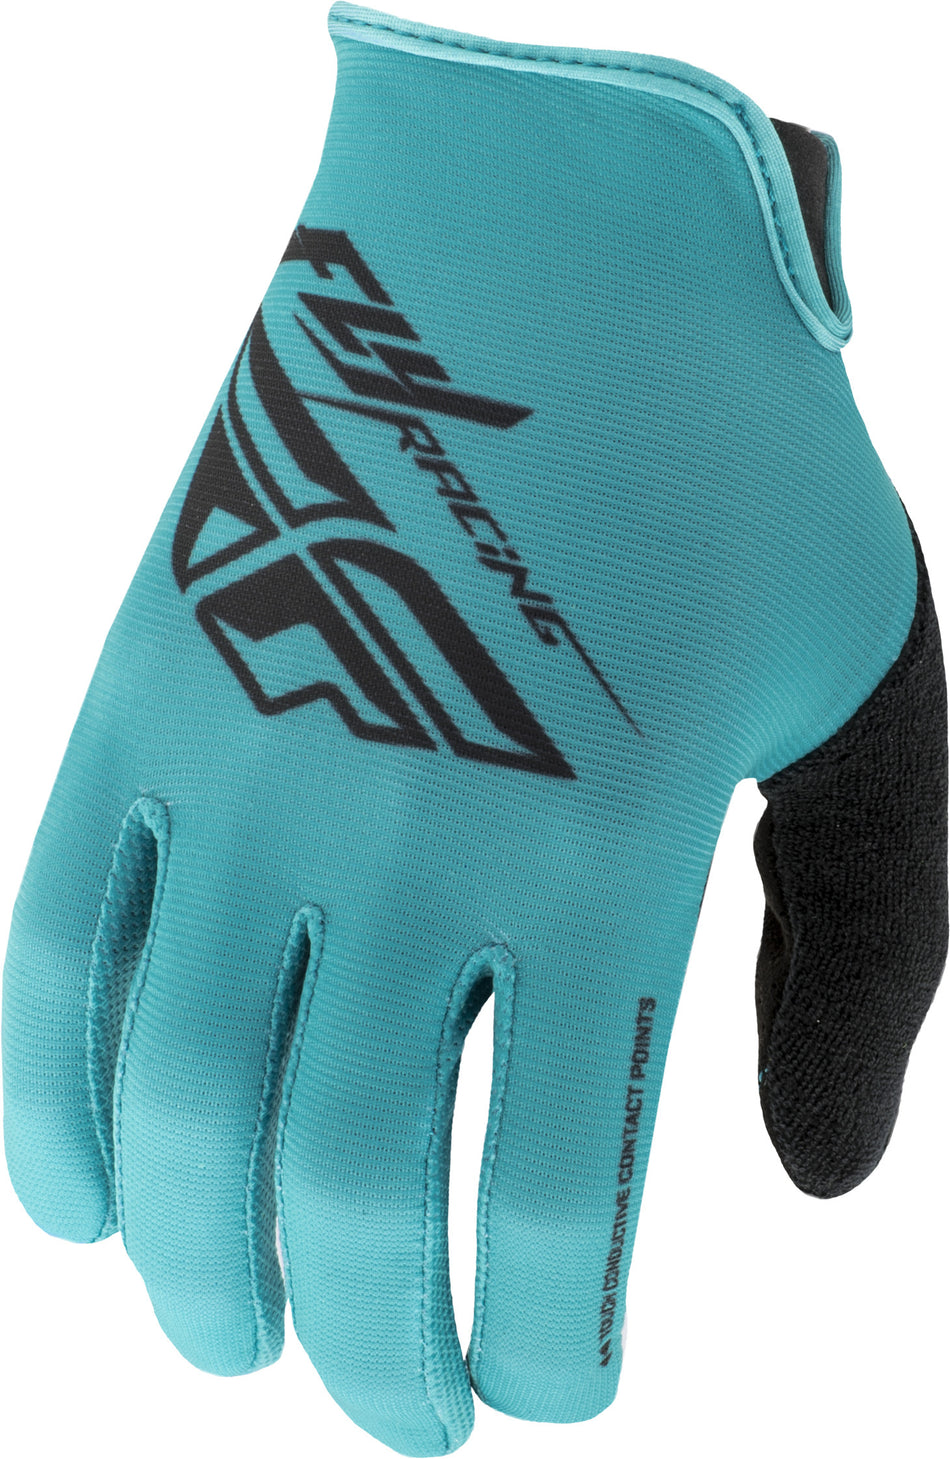 FLY RACING Media Gloves Teal/Black Sz 10 350-09710